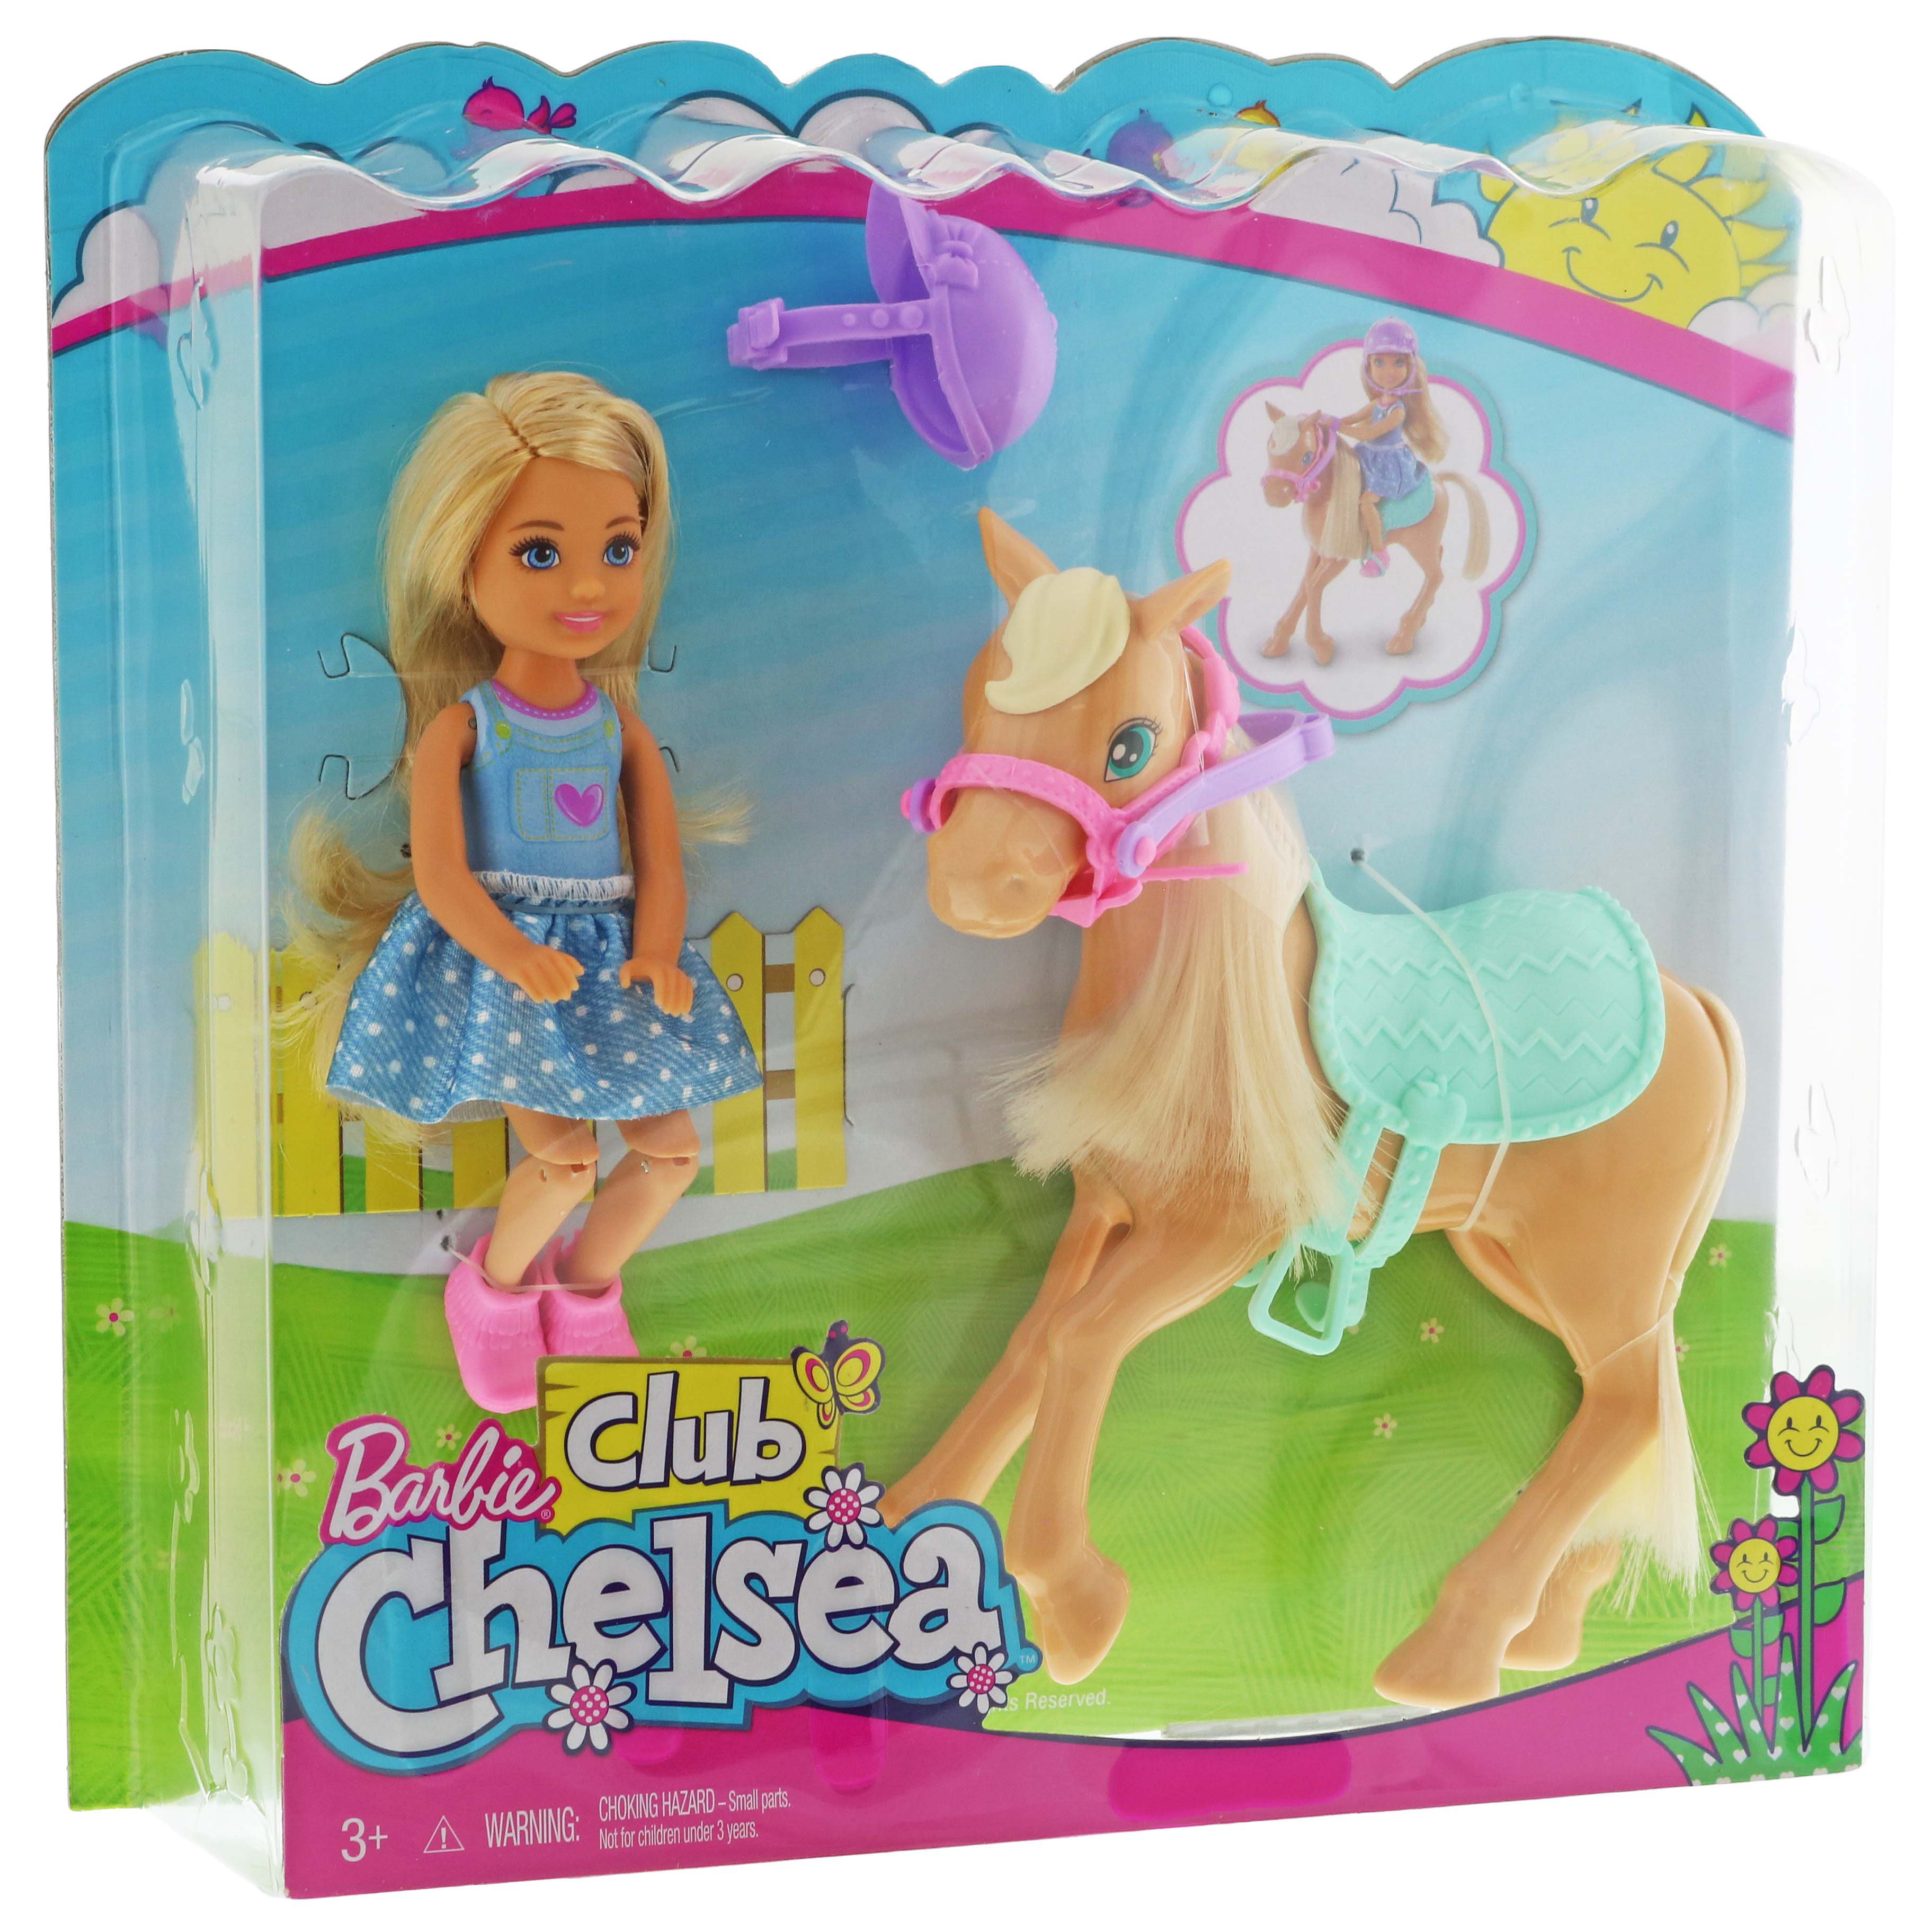 ondersteuning Kust vasteland Barbie Club Chelsea Doll Playset - Shop Action Figures & Dolls at H-E-B